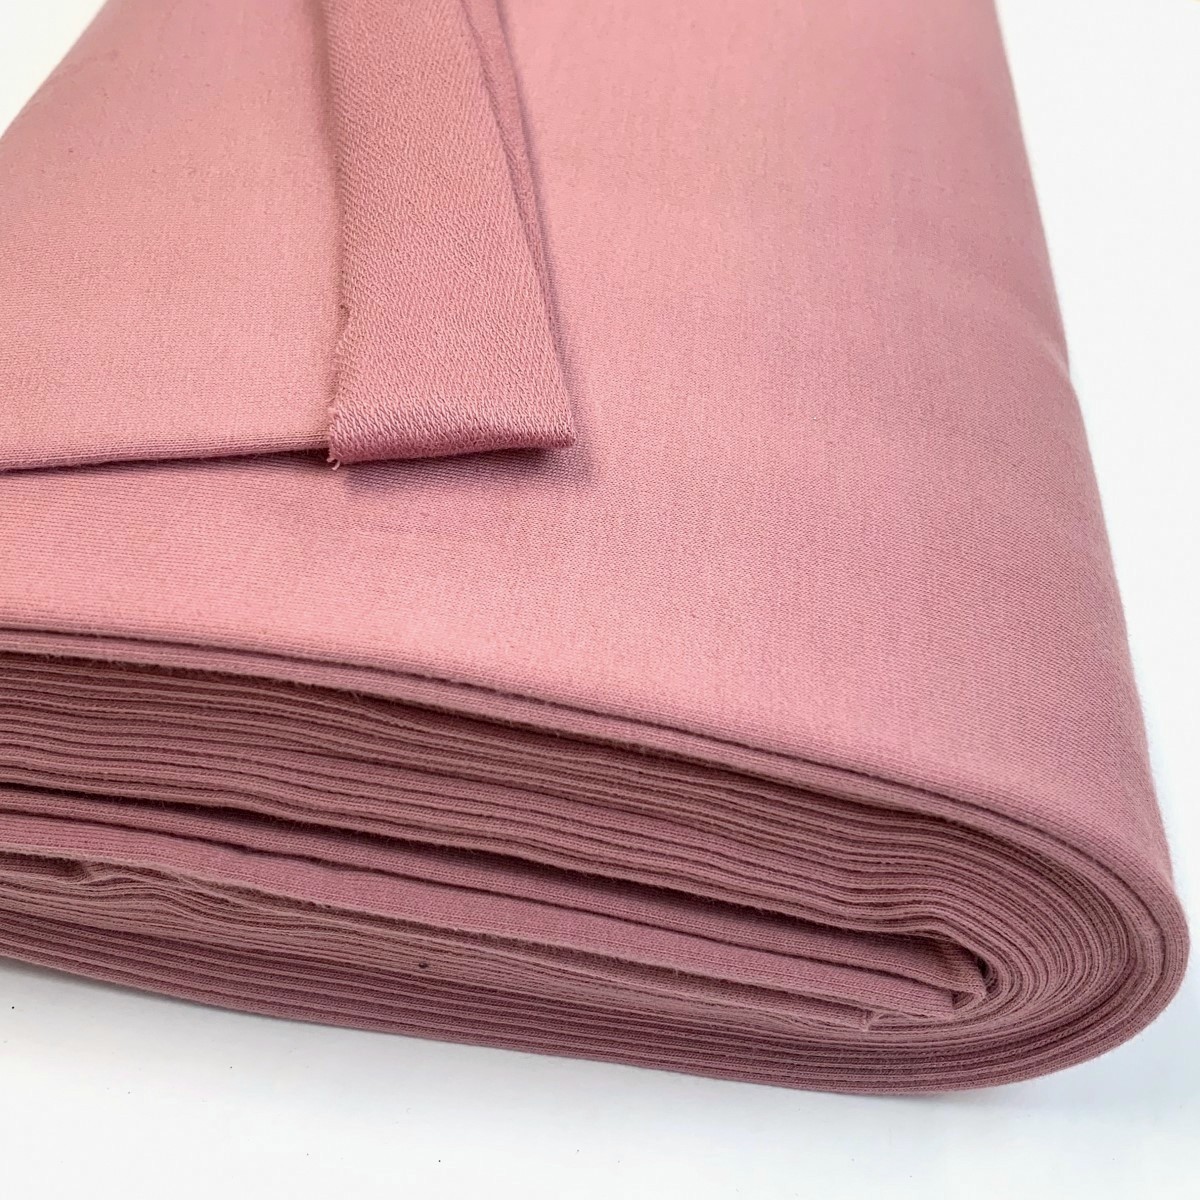 French Terry - Milkshake - Plain Dusky Pink Coloured French Terry Sweatshirt Knitted Jersey Fabric - Close Up Drape Fabric Photo  (Custom)